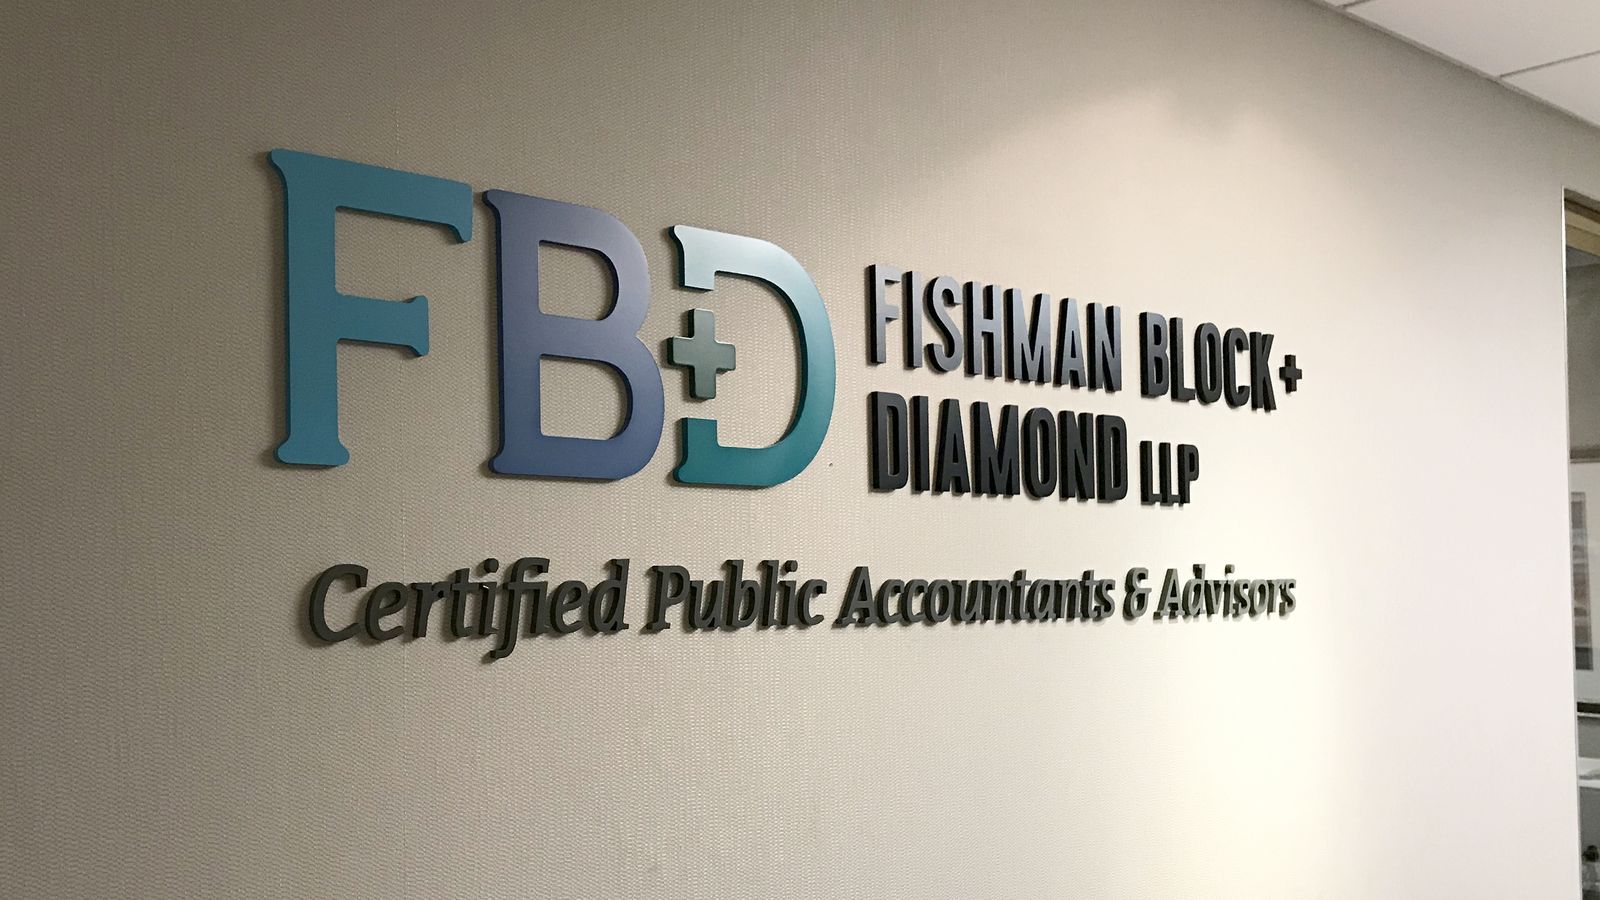 fishman block plus diamond 3d letters